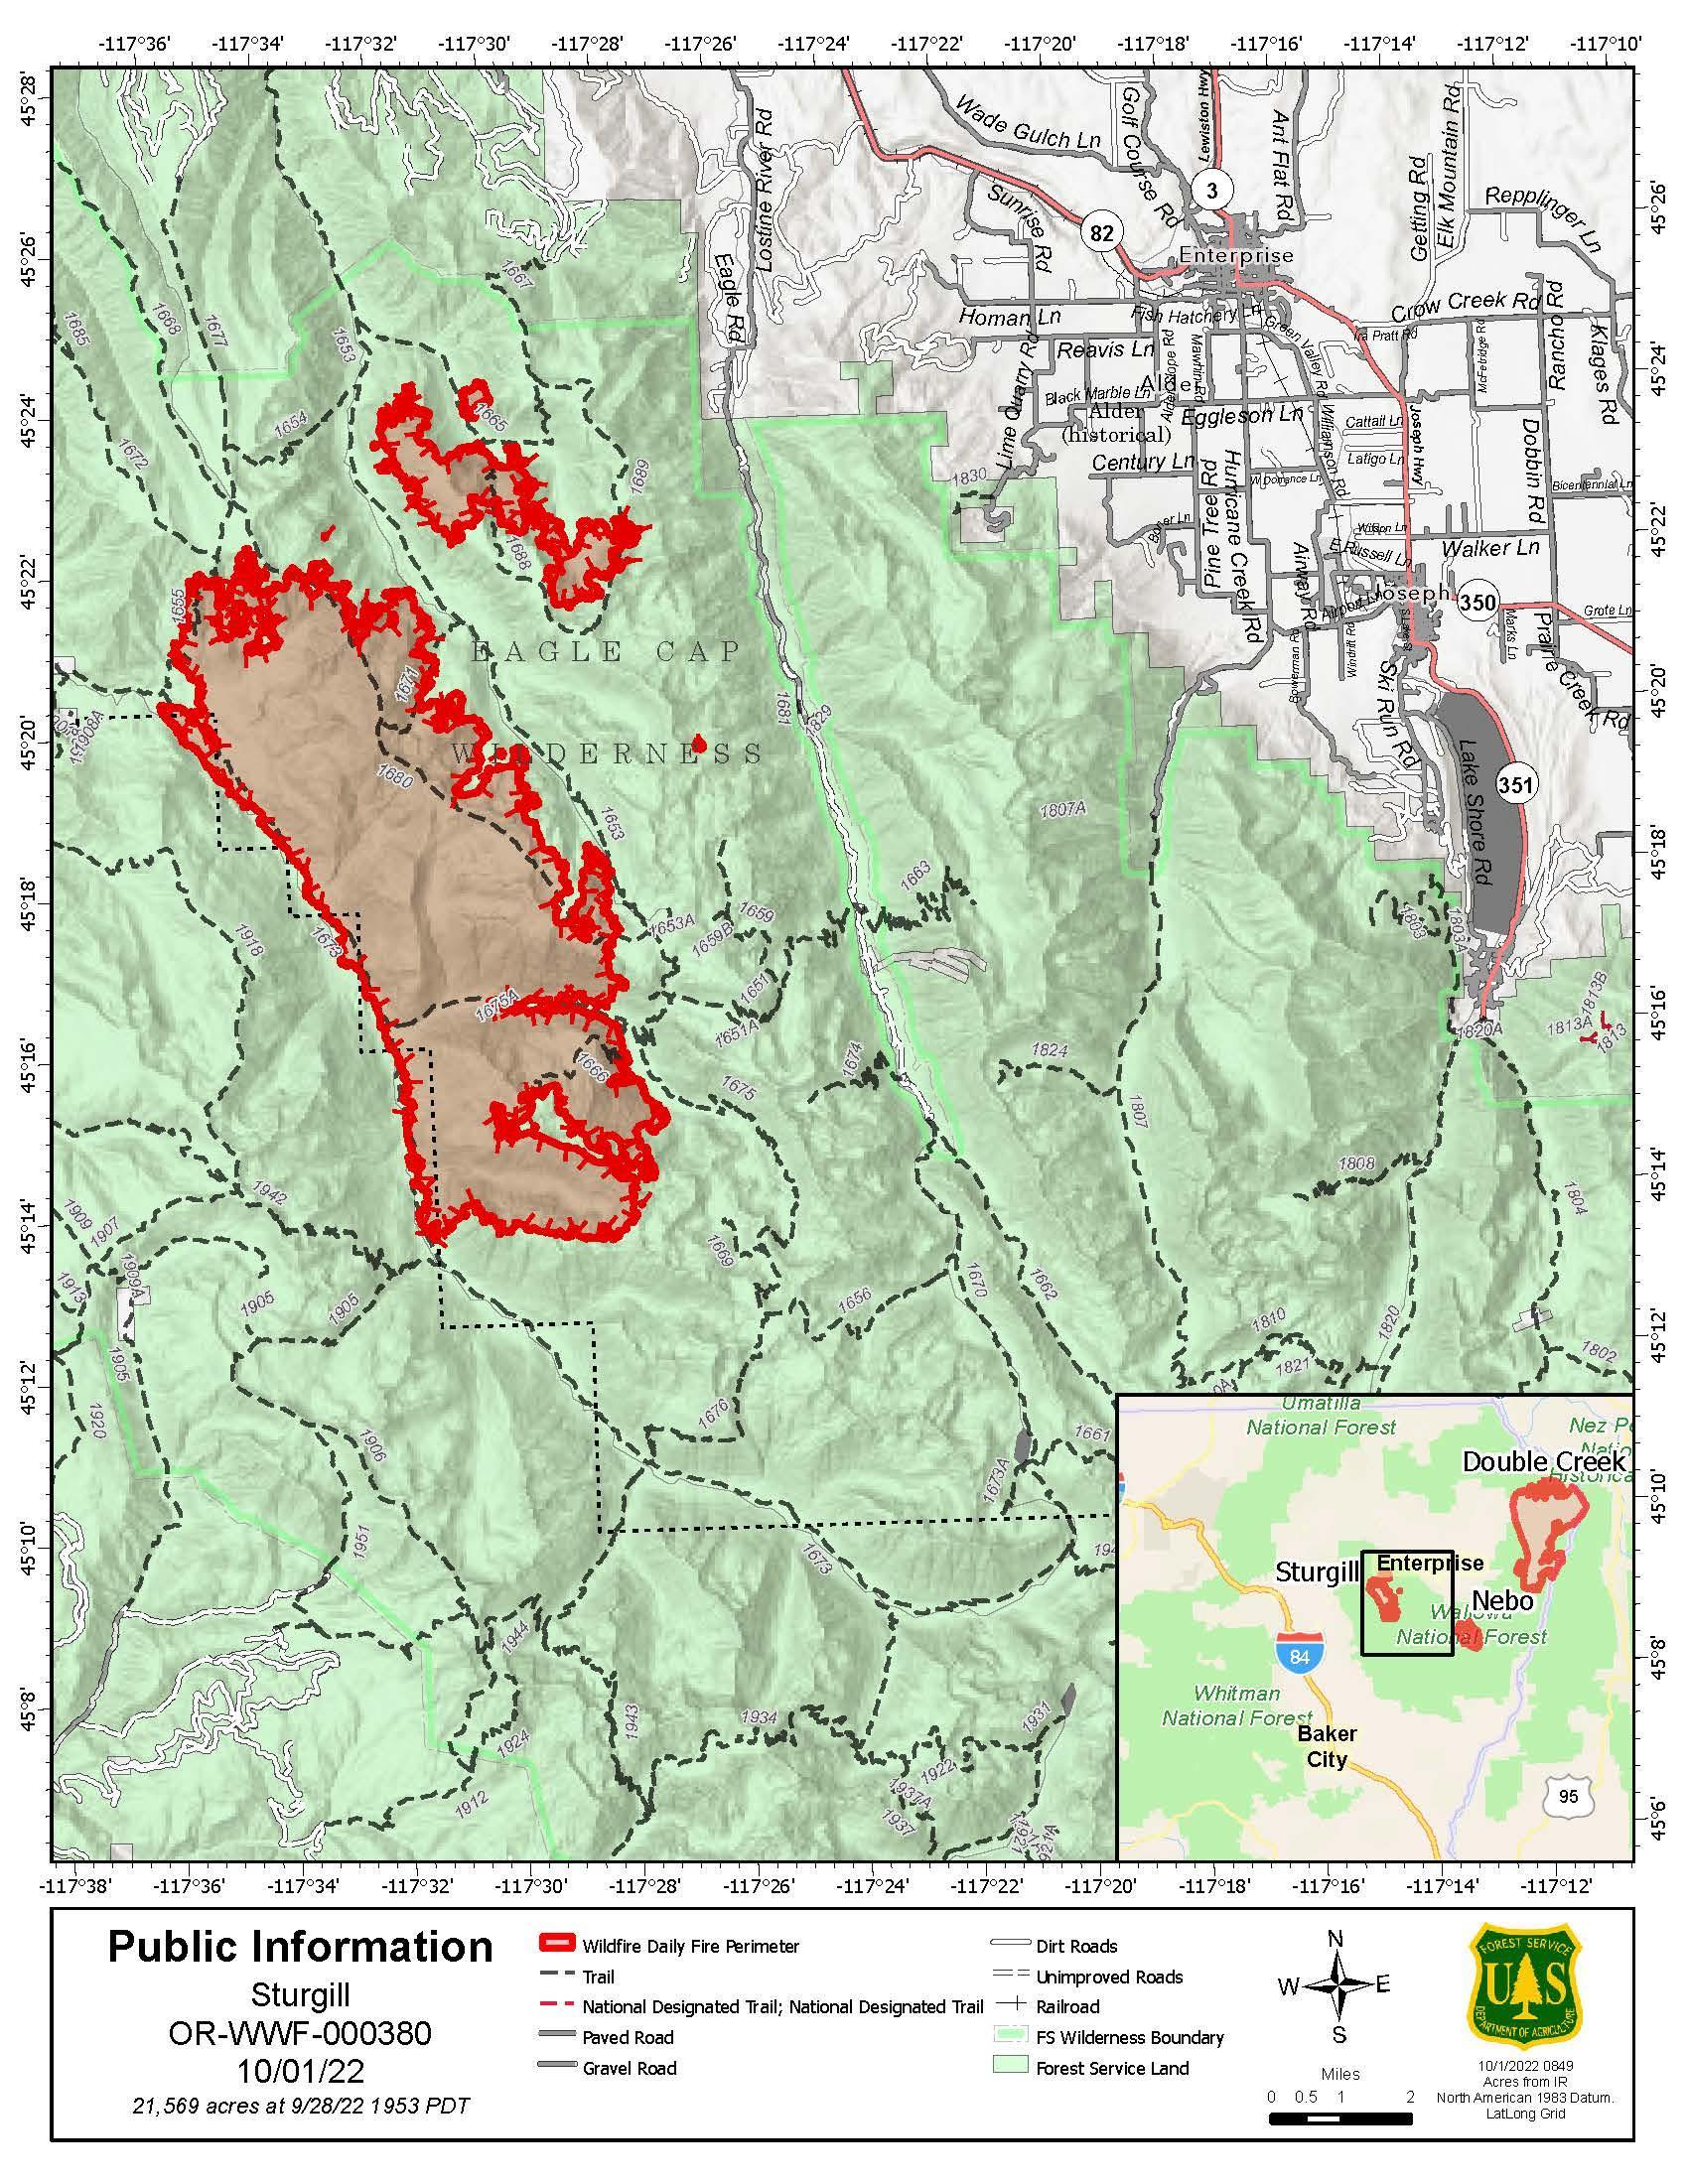 Goat Mountain 2 Fire Map - 20221001